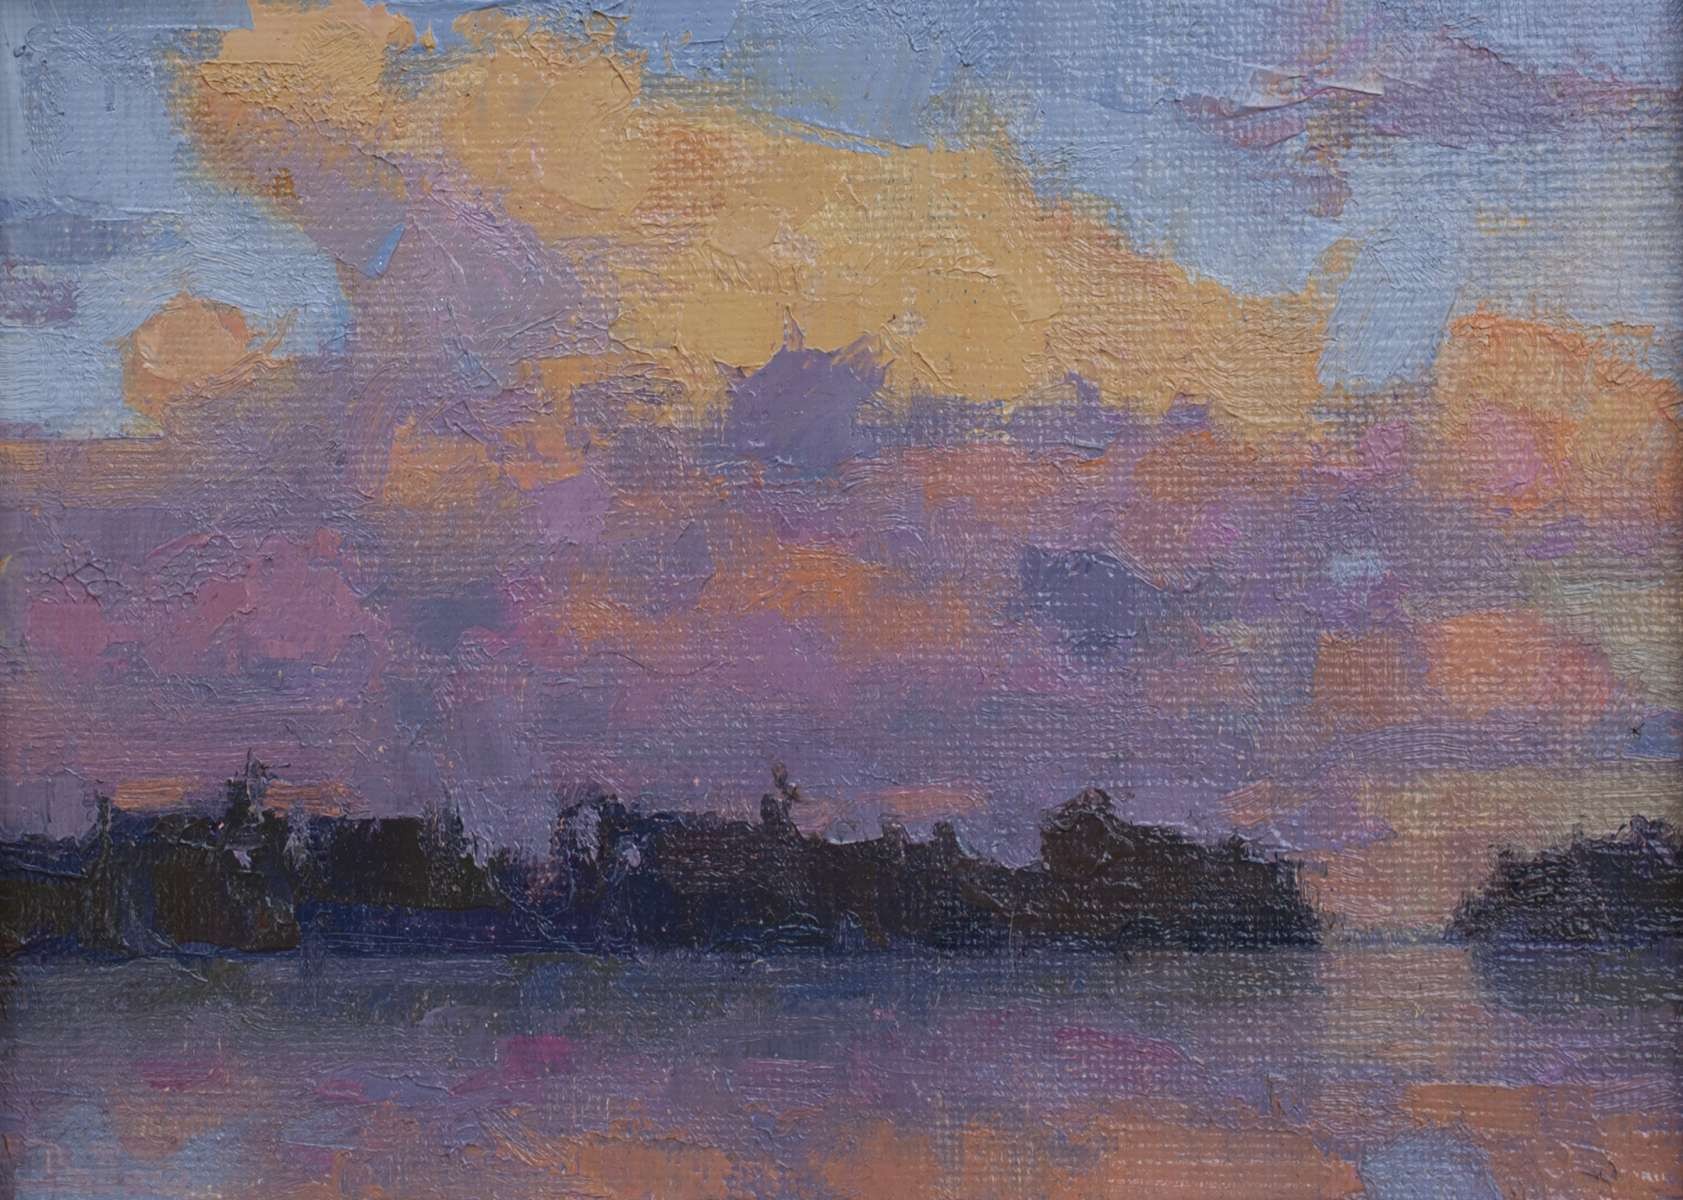 Evening Harbor by David Ballew